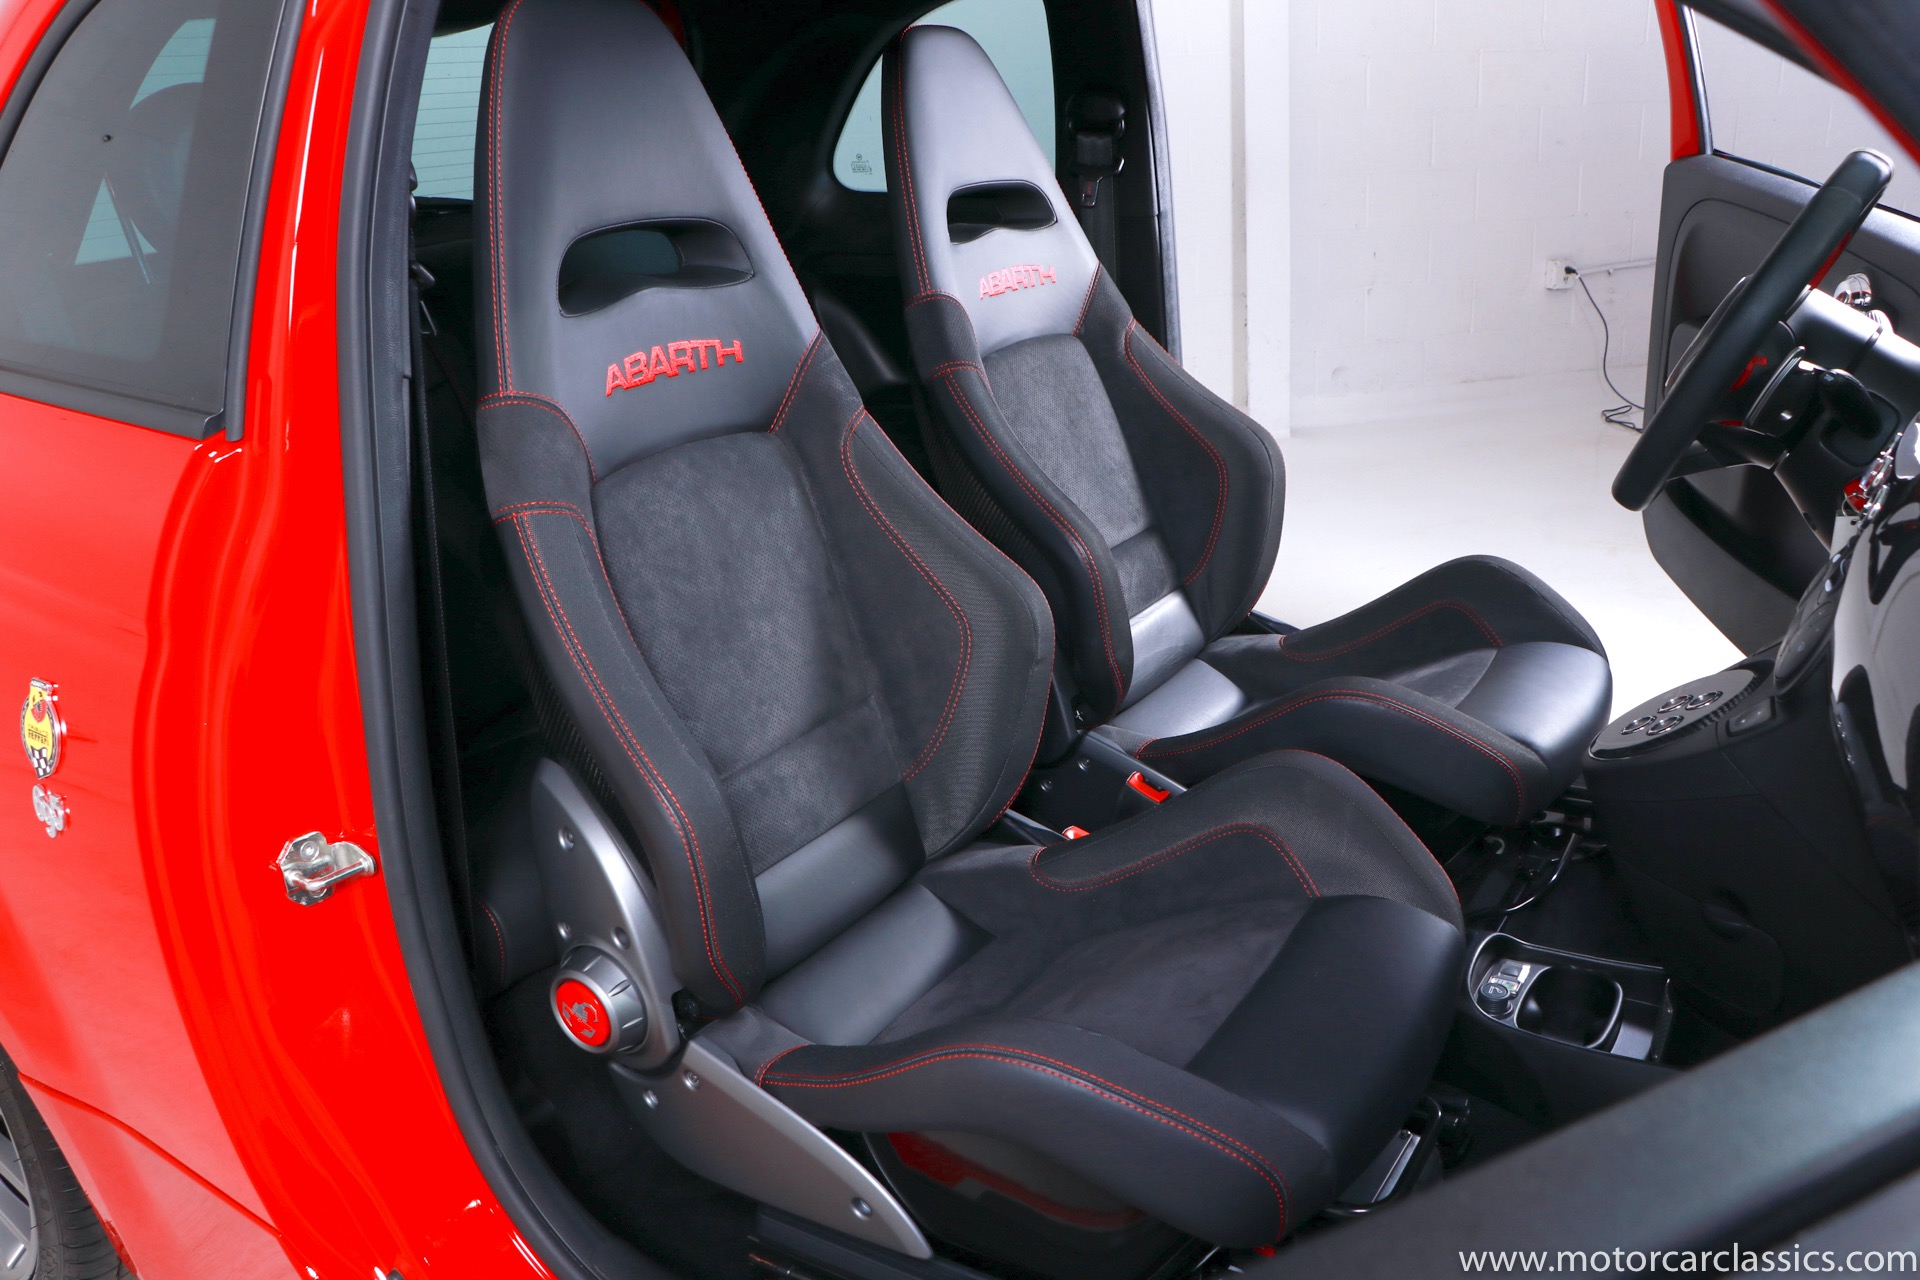 2017 Fiat Abarth 695 Tributo Ferrari